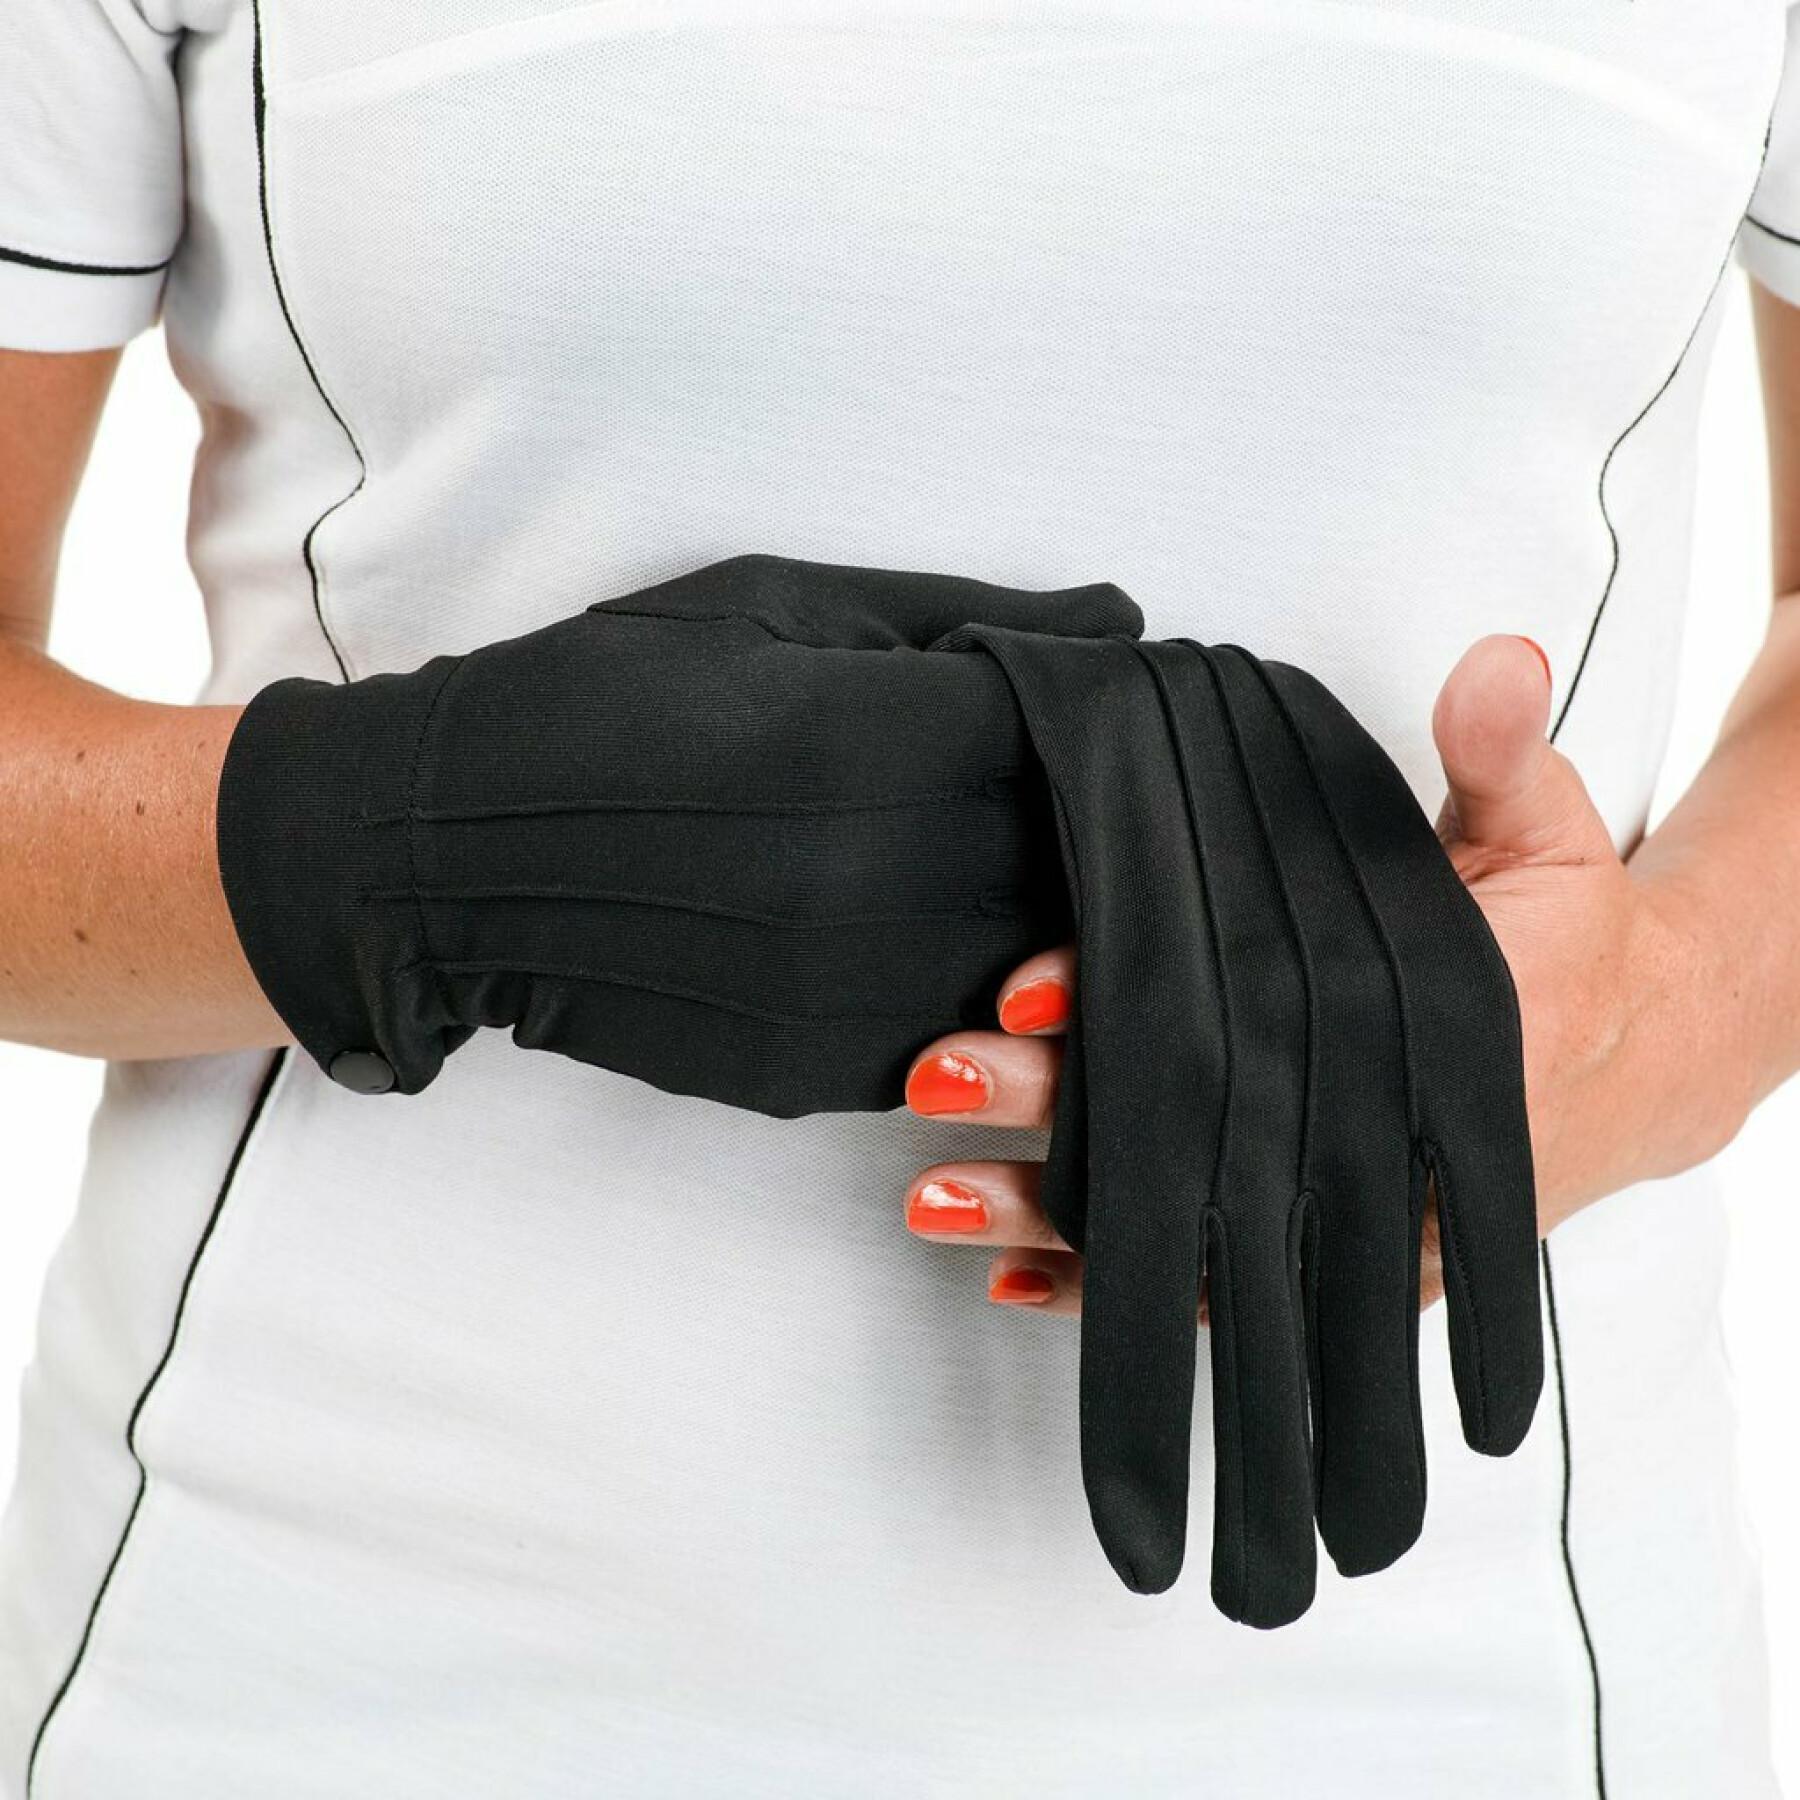 Dünne Handschuhe Back on Track